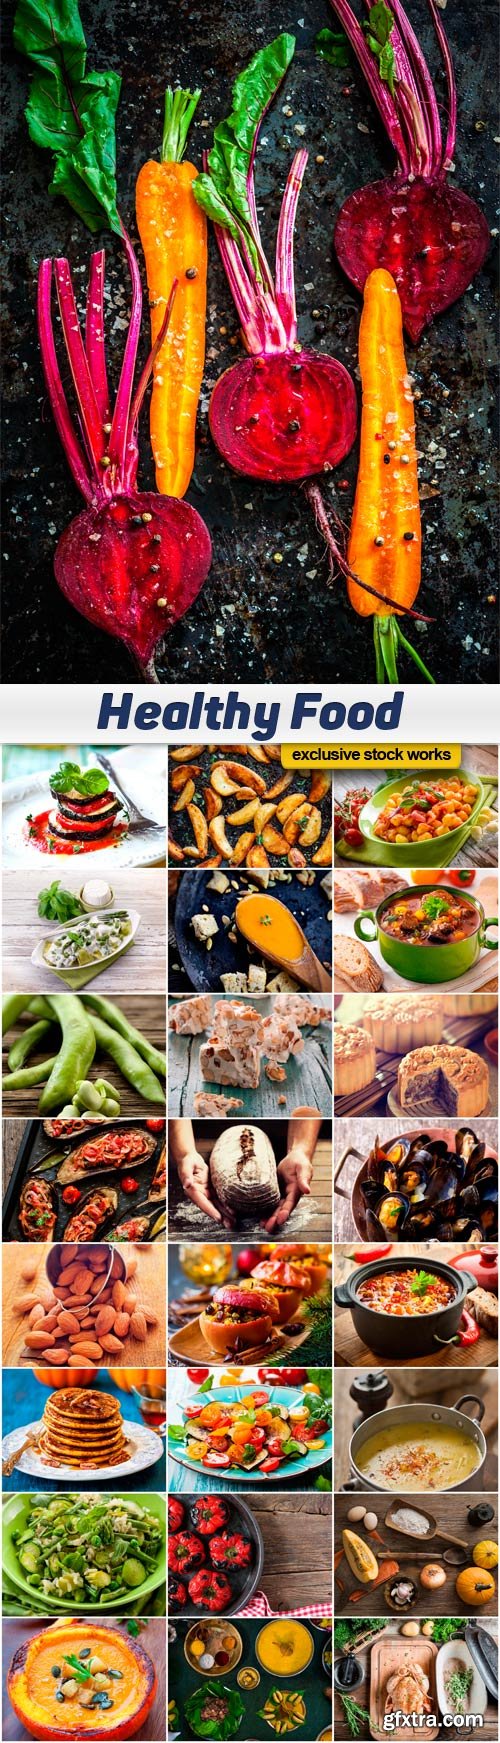 Tasty Healthy Food Images - 25x JPEG